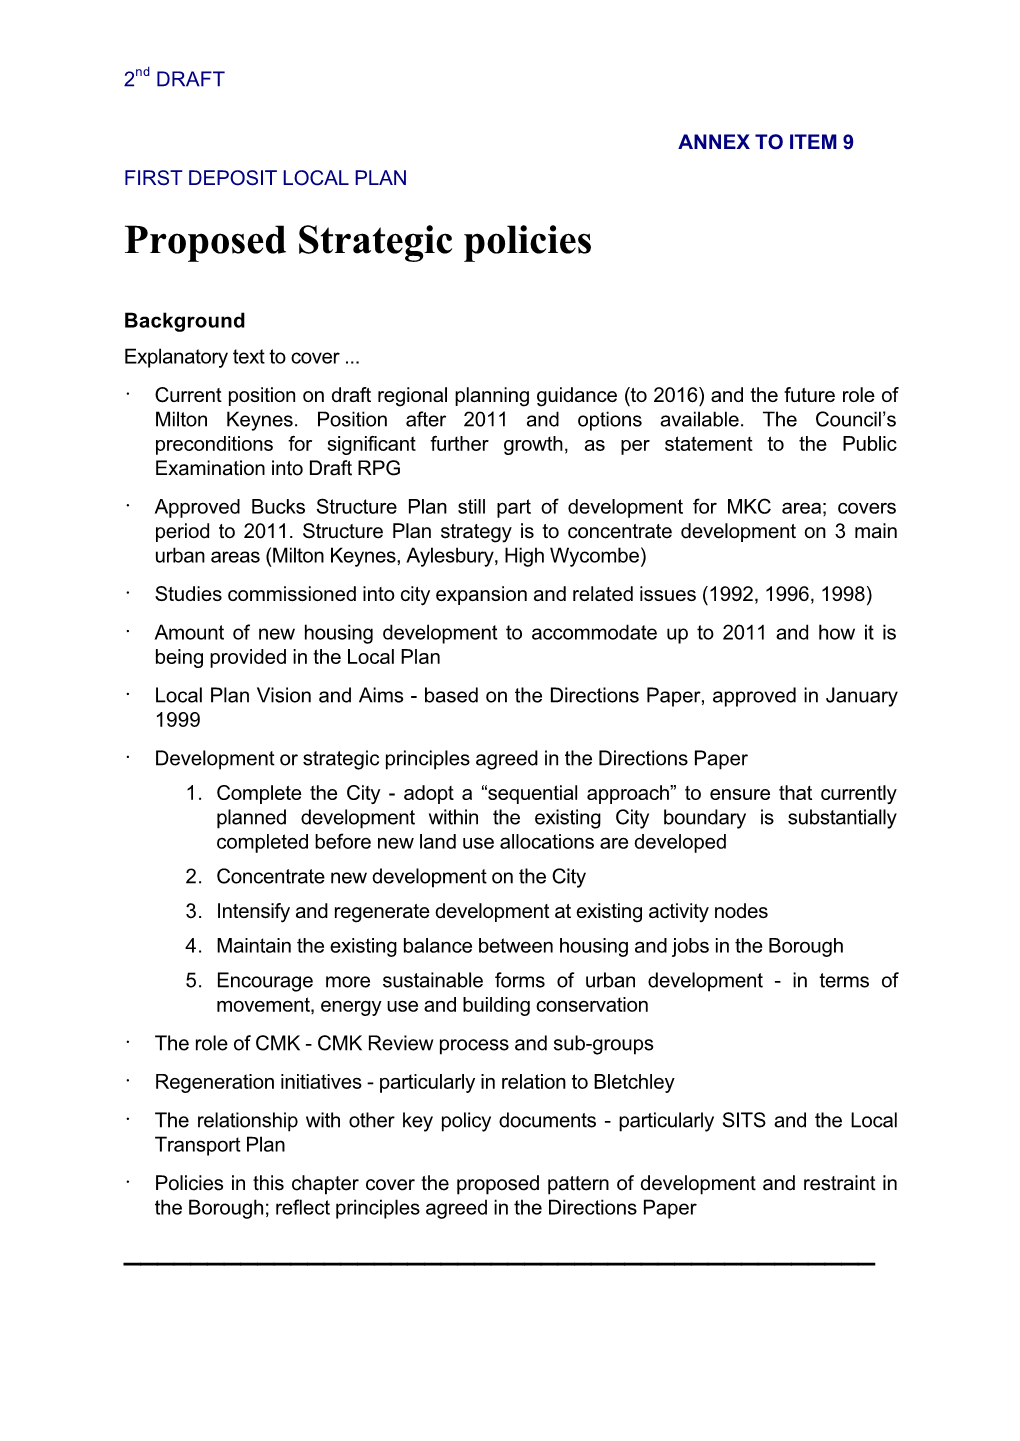 Proposed Strategic Policies